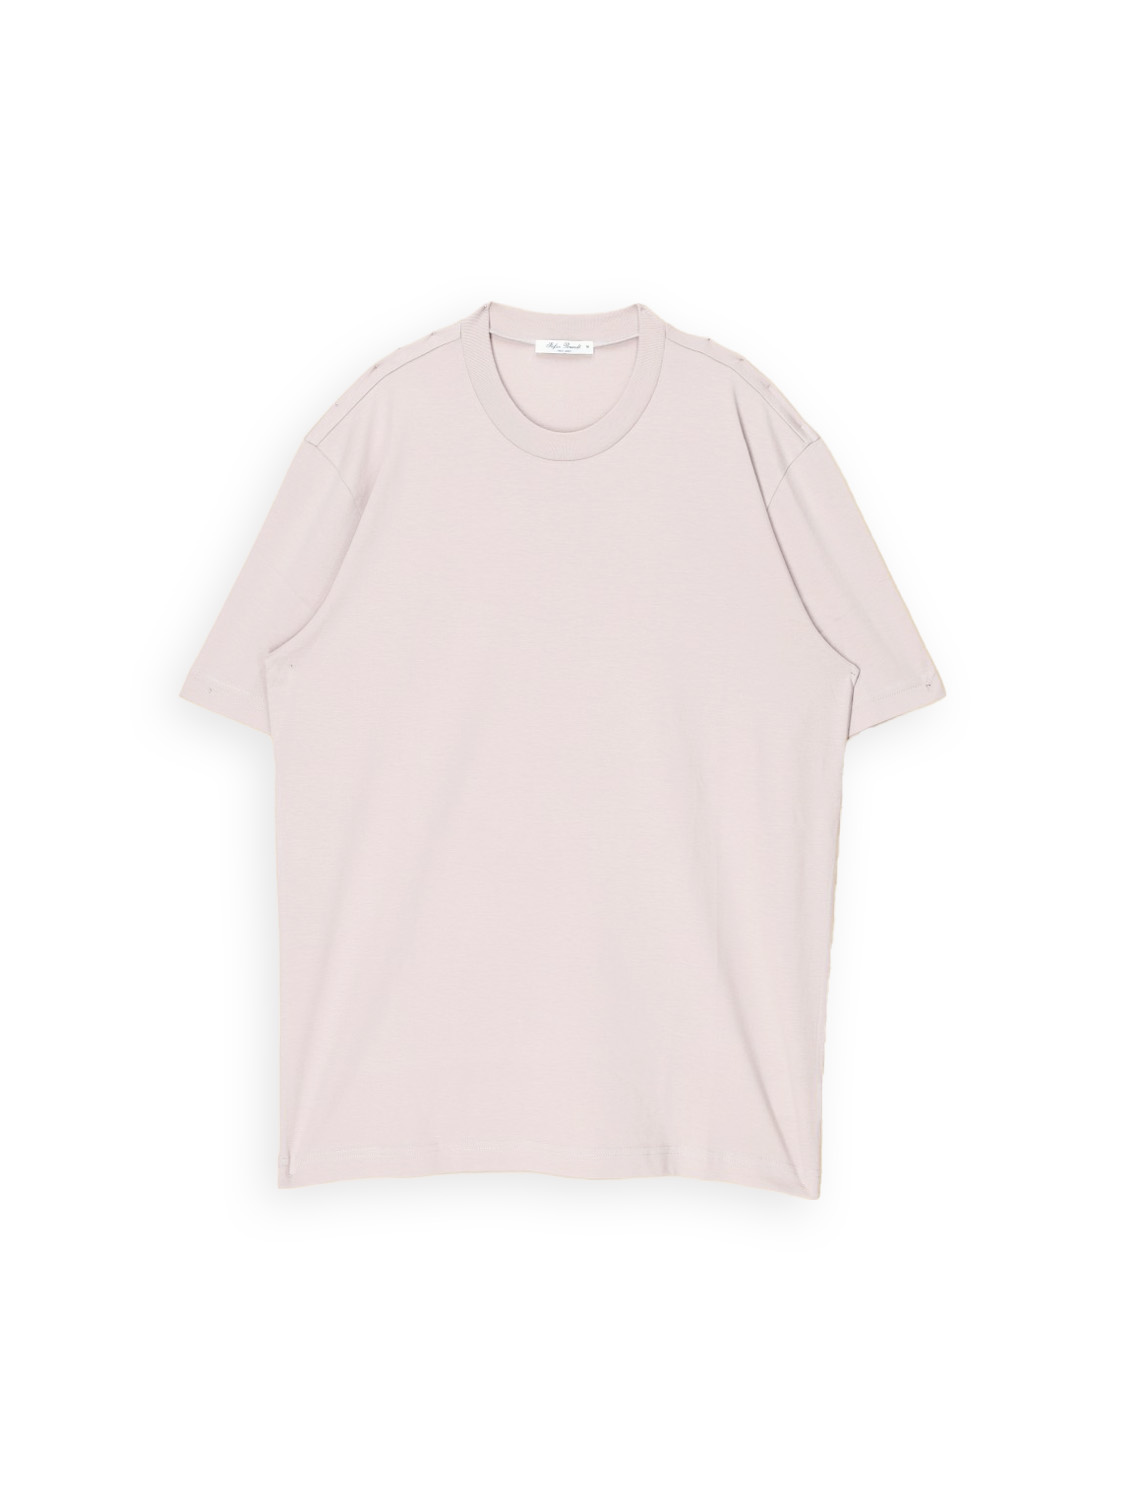 Eli 30 – cotton shirt 